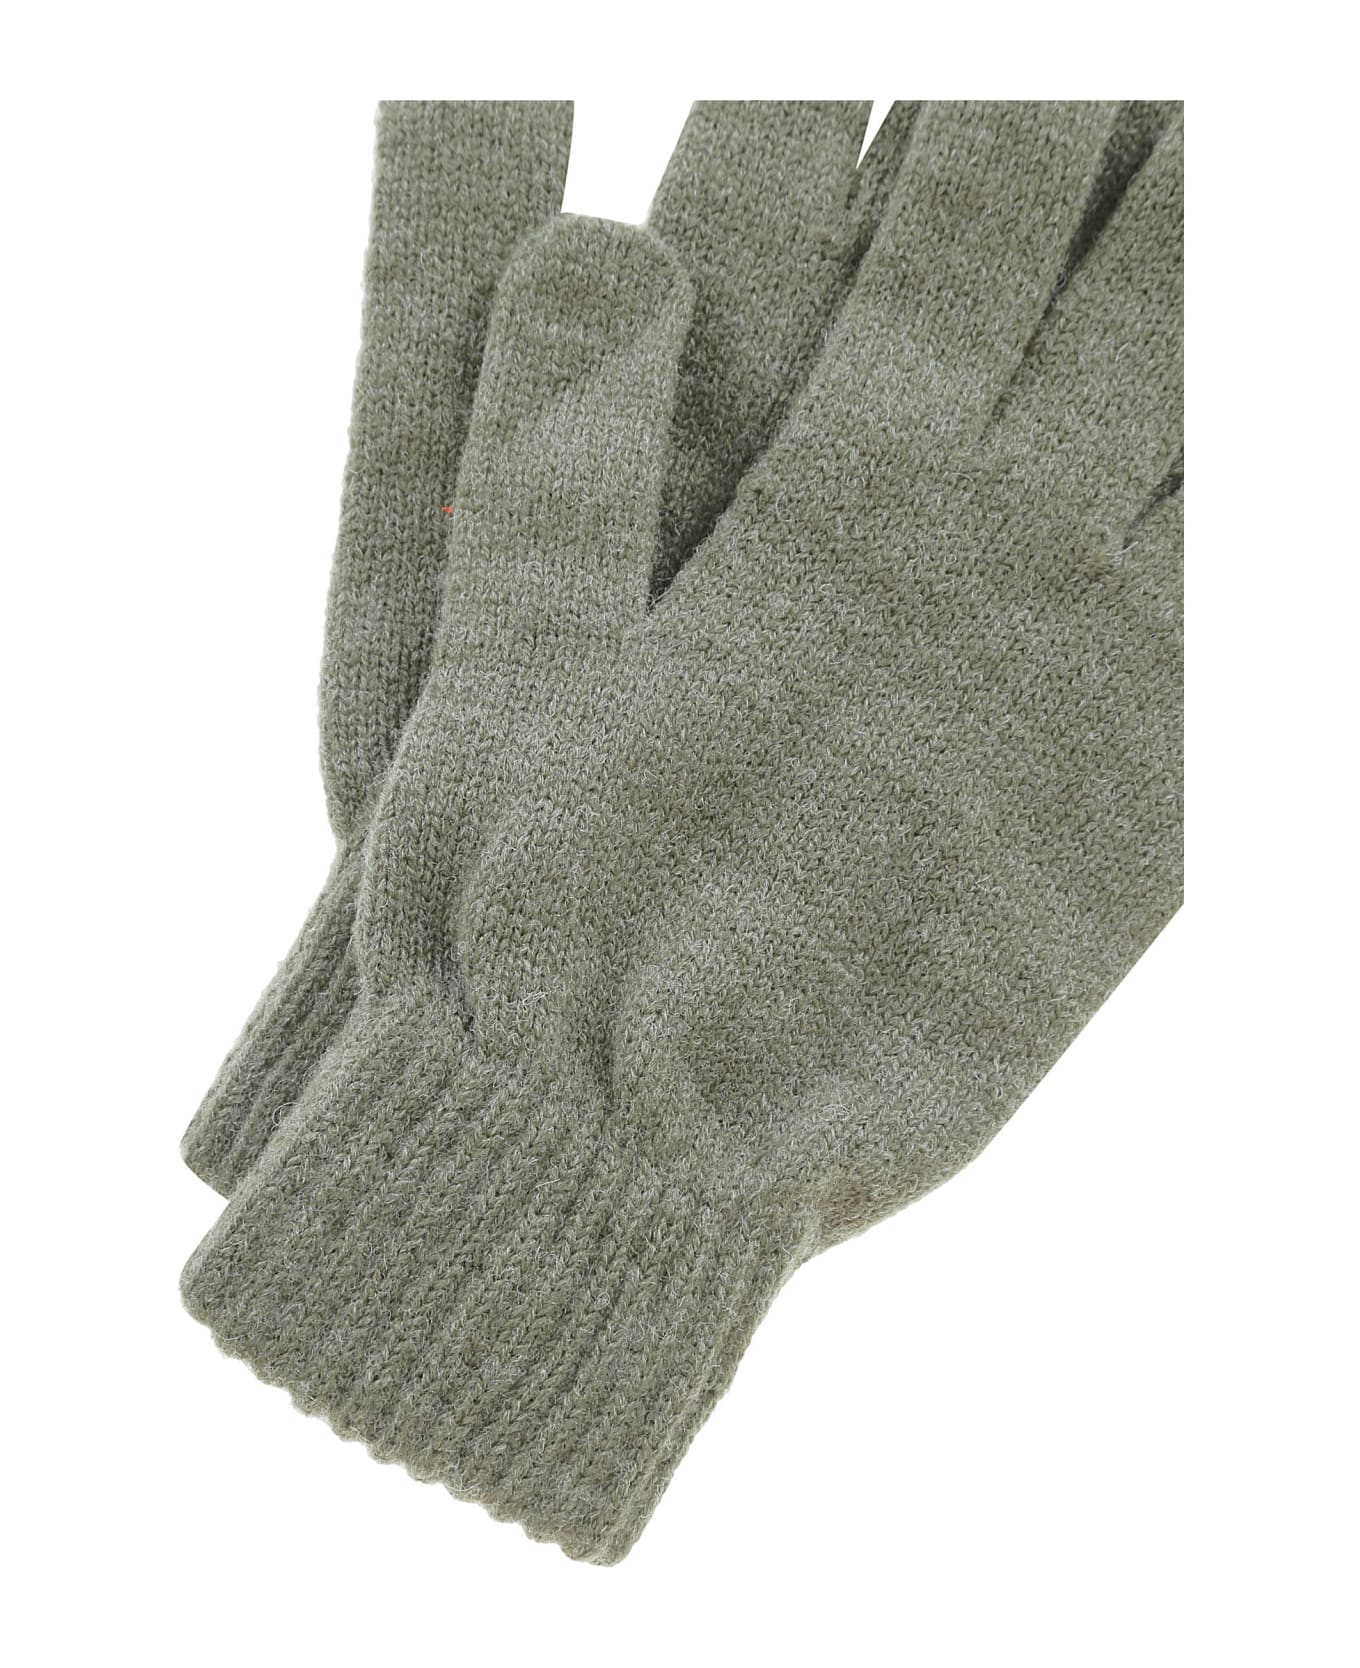 Barbour Tartan Scarf & Glove Gift Set - Tartan